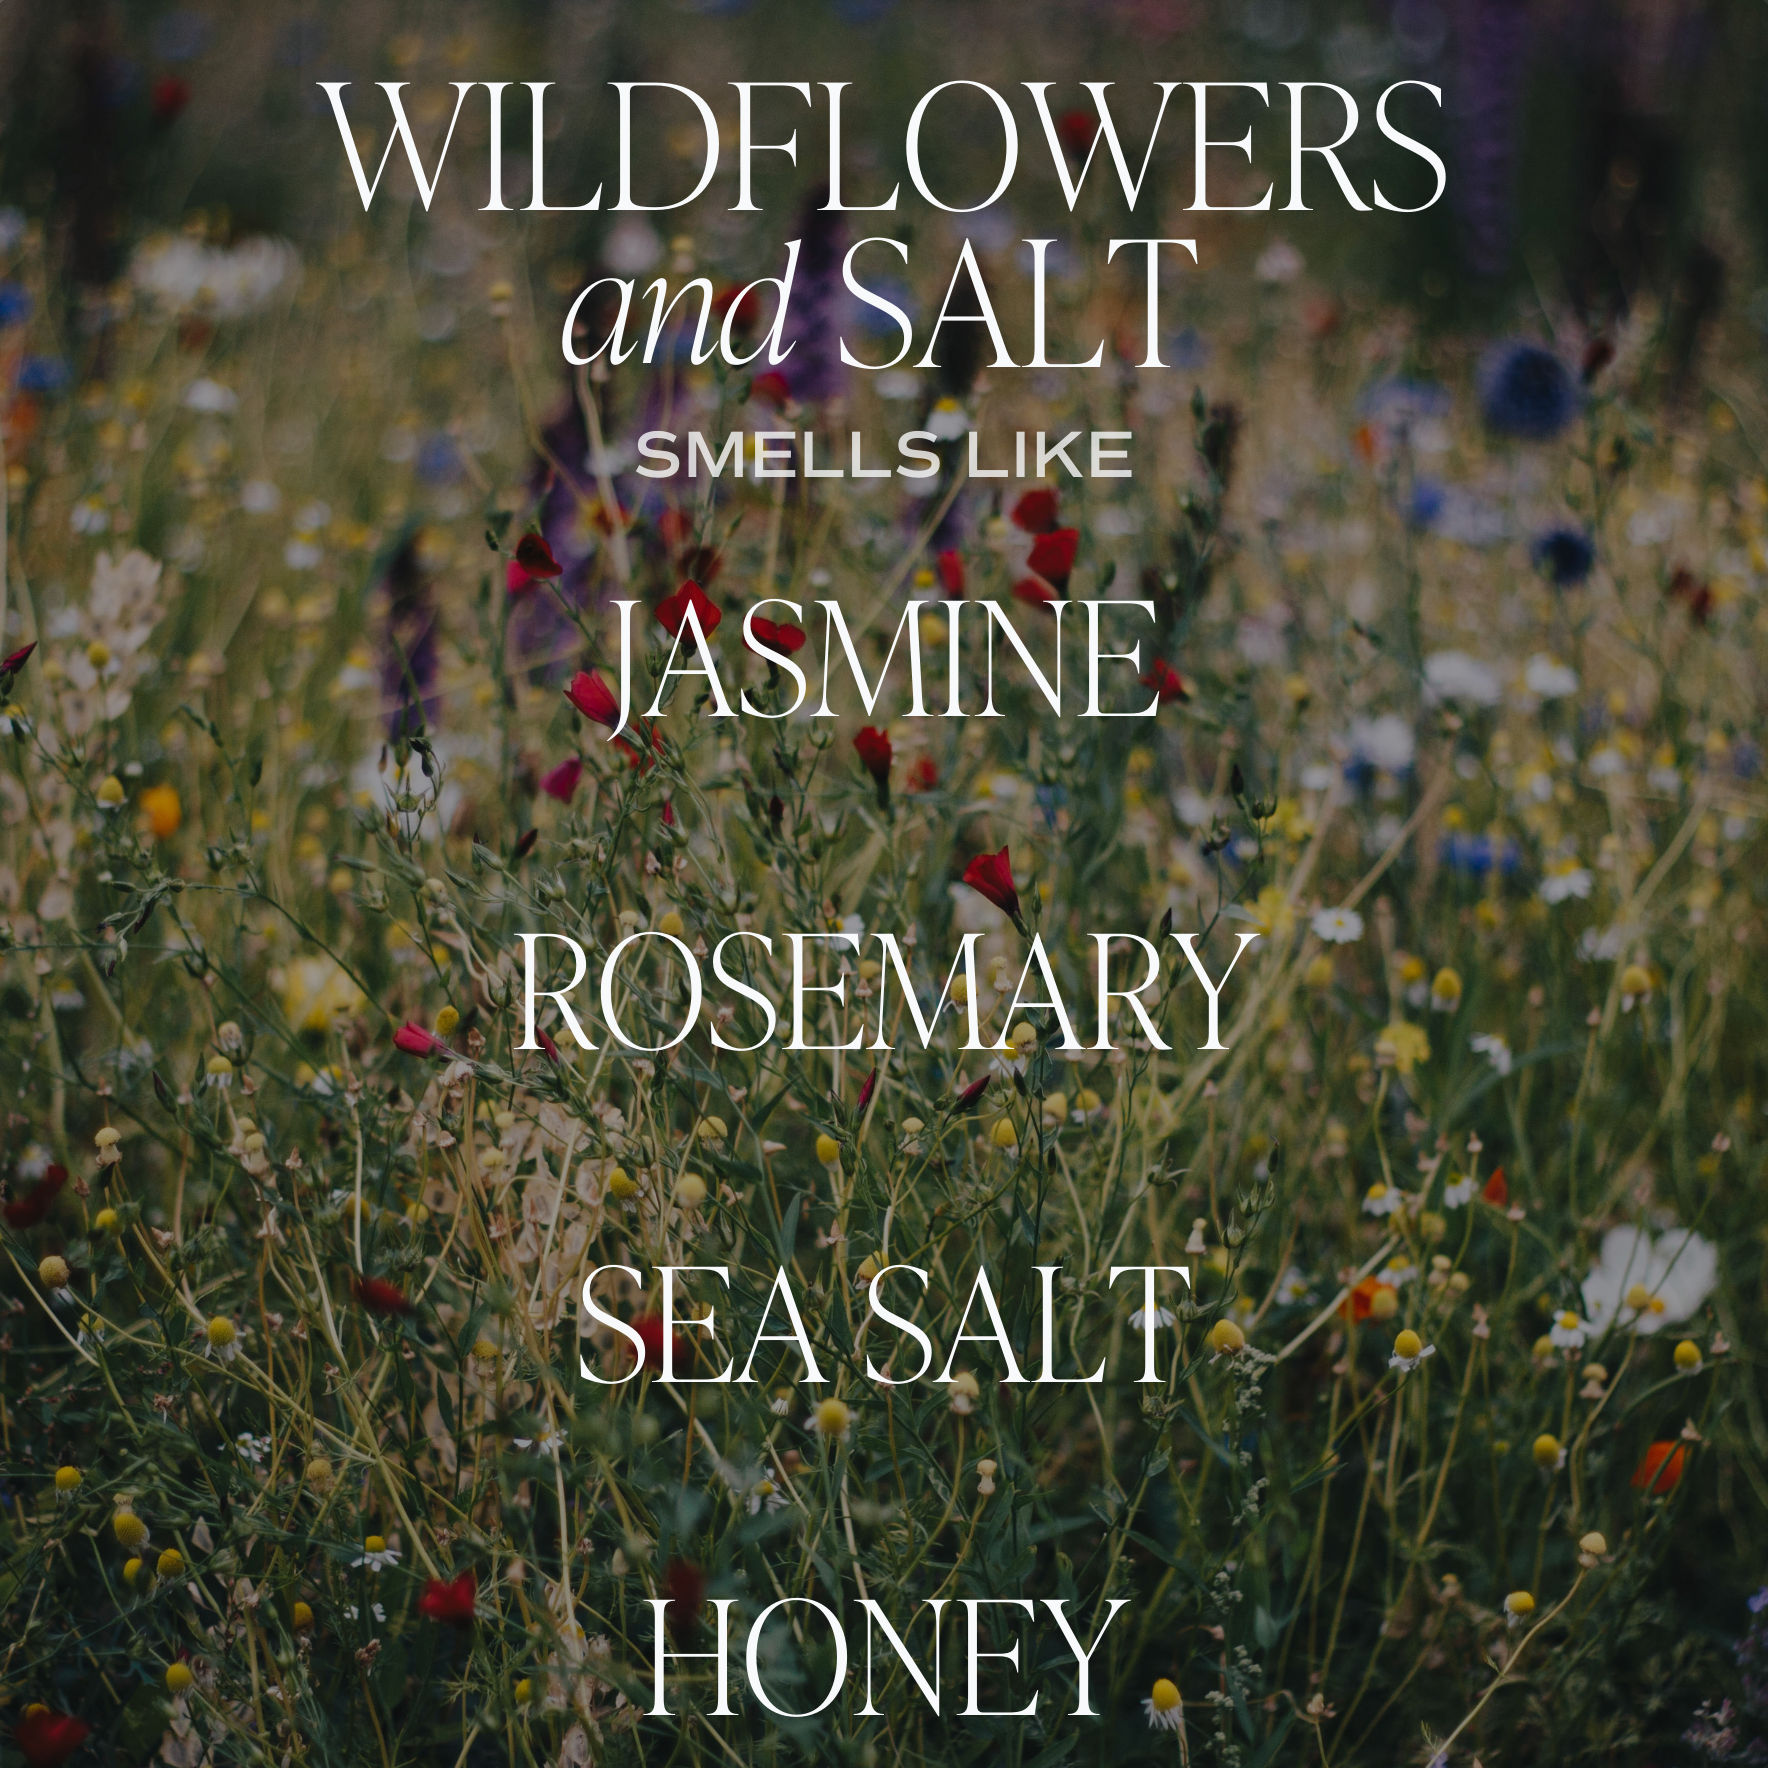 Wild Flowers and Salt 9 Oz